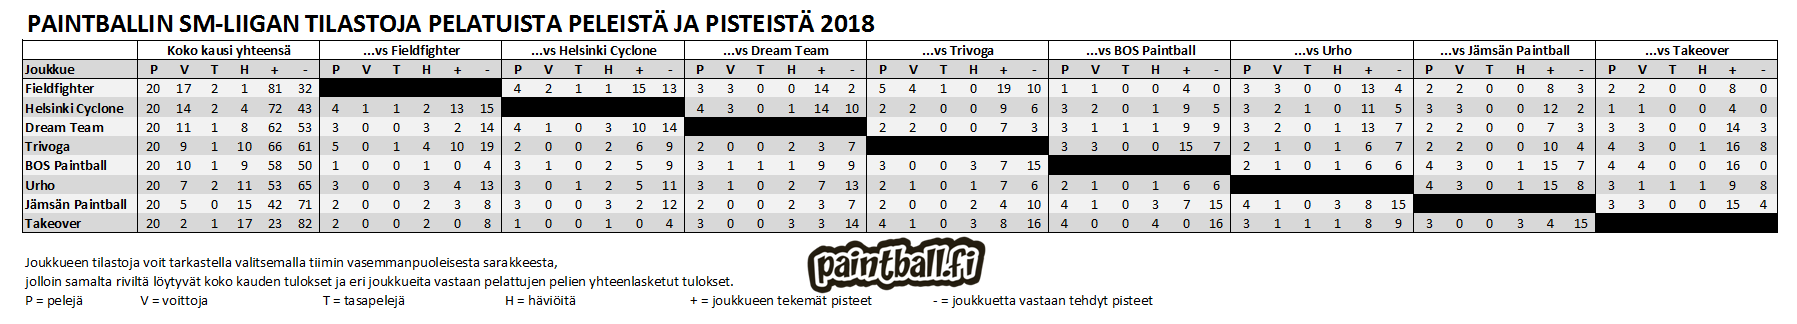 2018_smliiga_tilastot.PNG